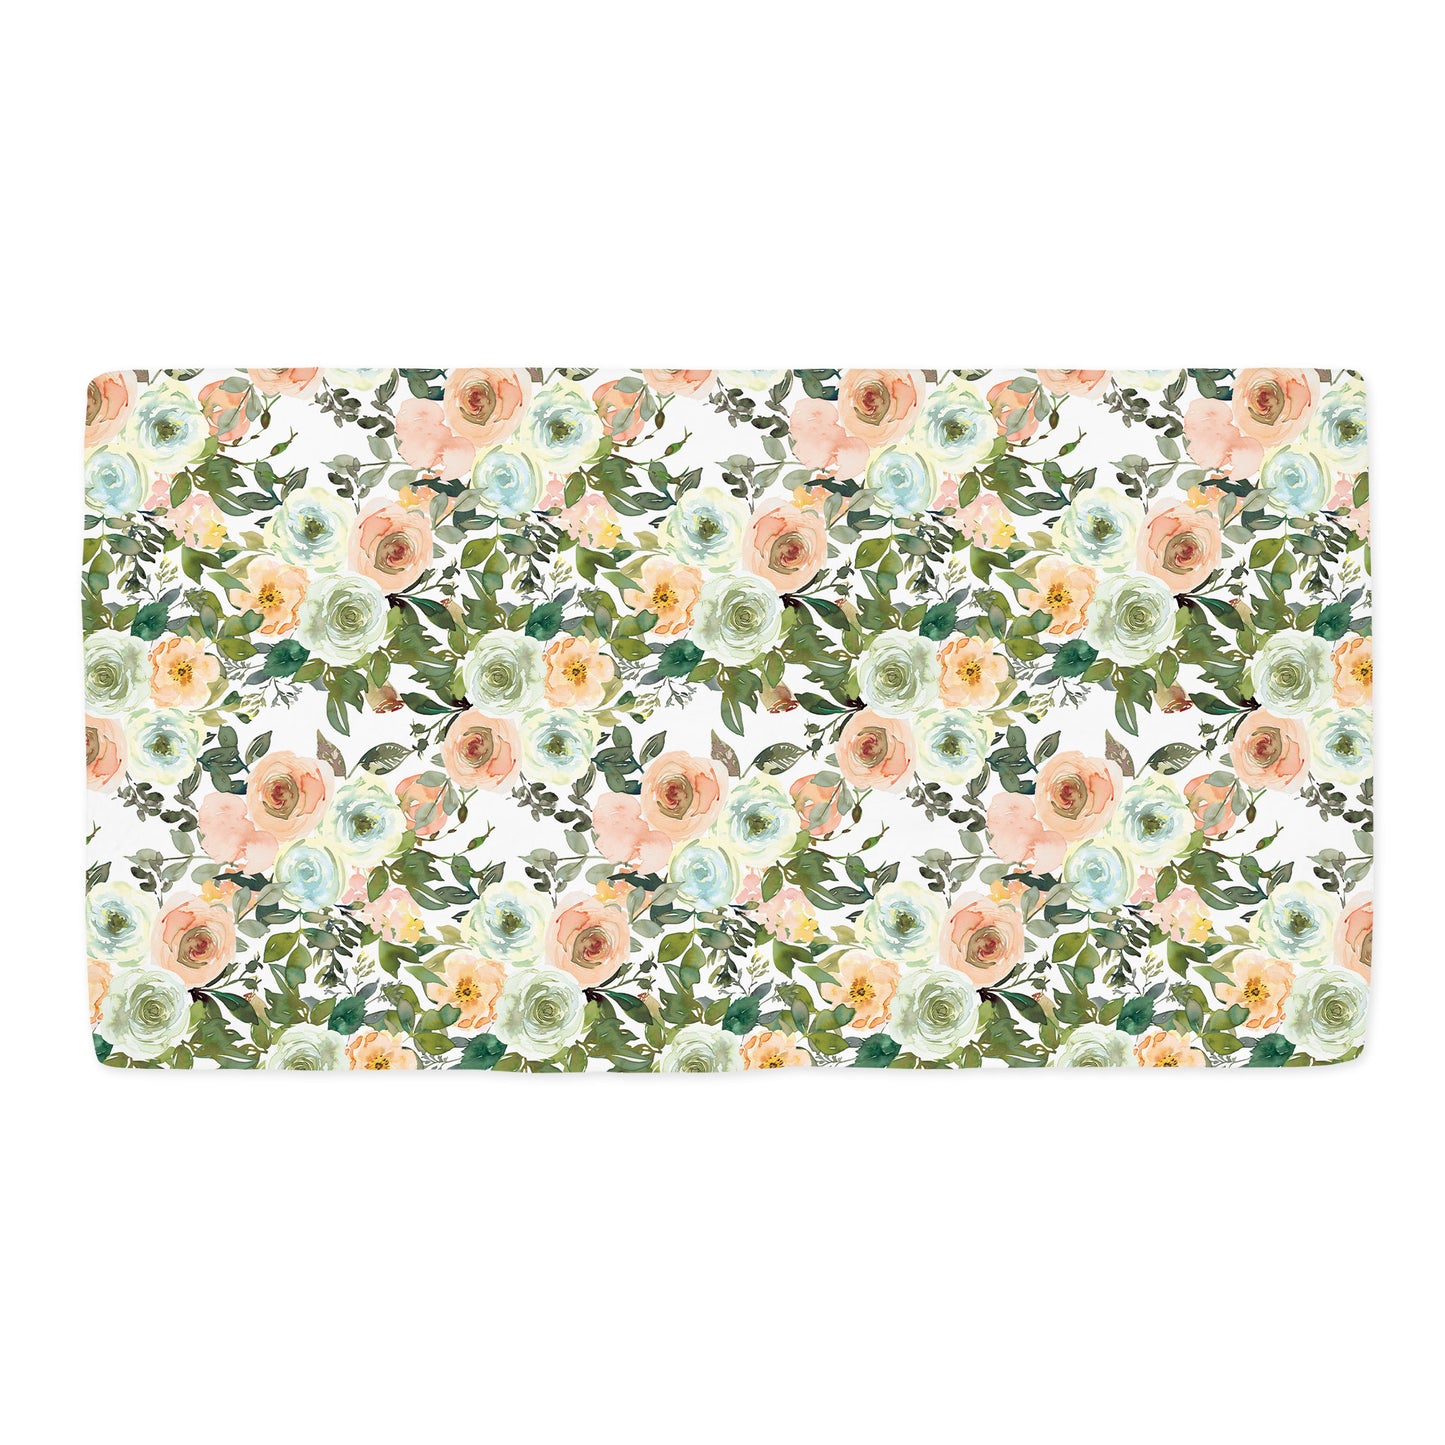 Floral Minky Crib Sheet, Baby Girl Nursery Bedding - Peach Mint Garden